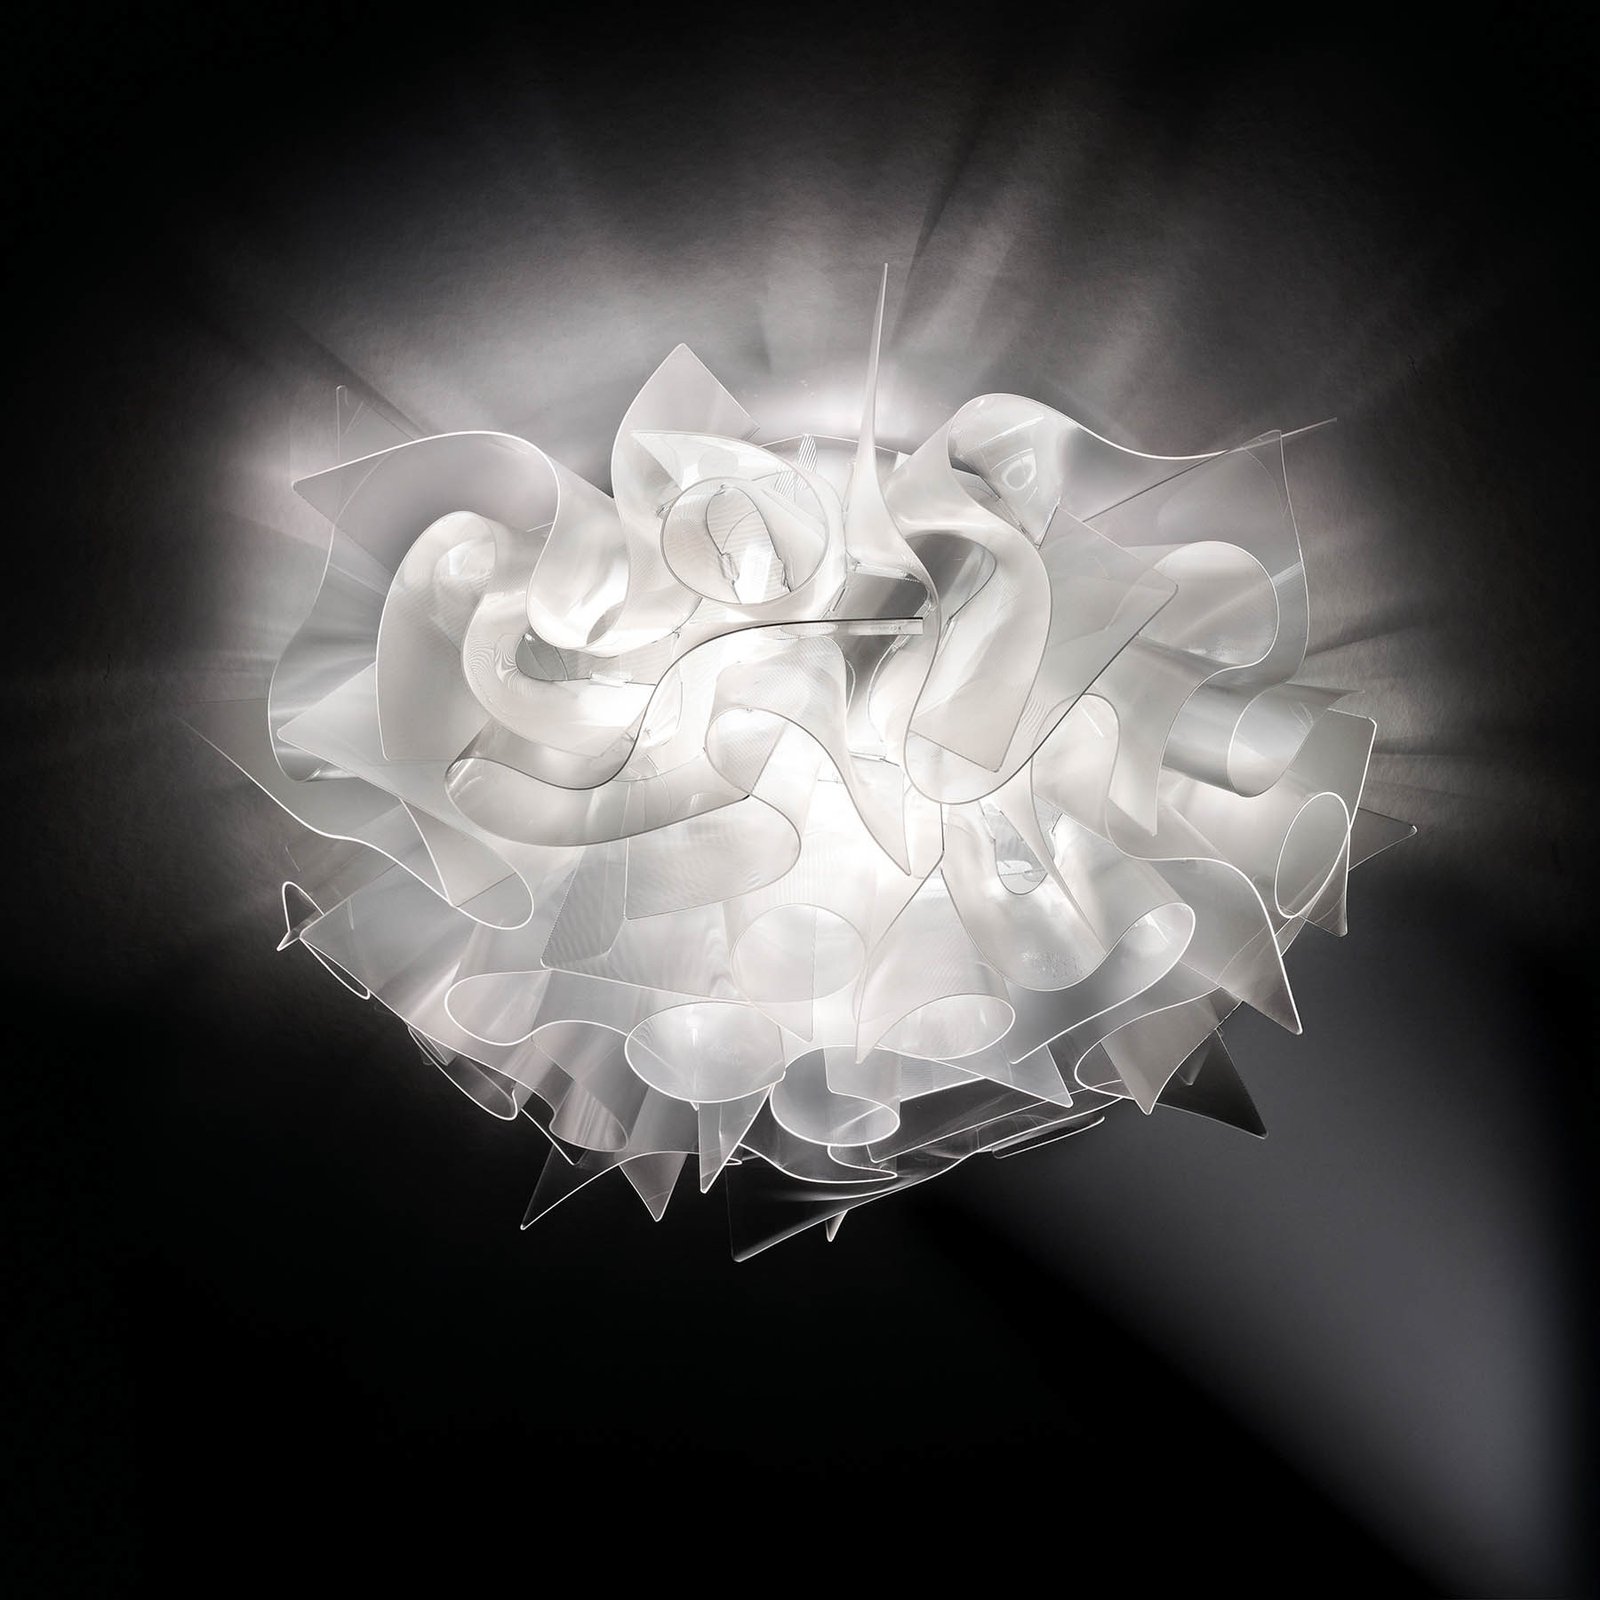 Slamp Veli Prisma - Designer-Deckenlampe, Ø 53cm